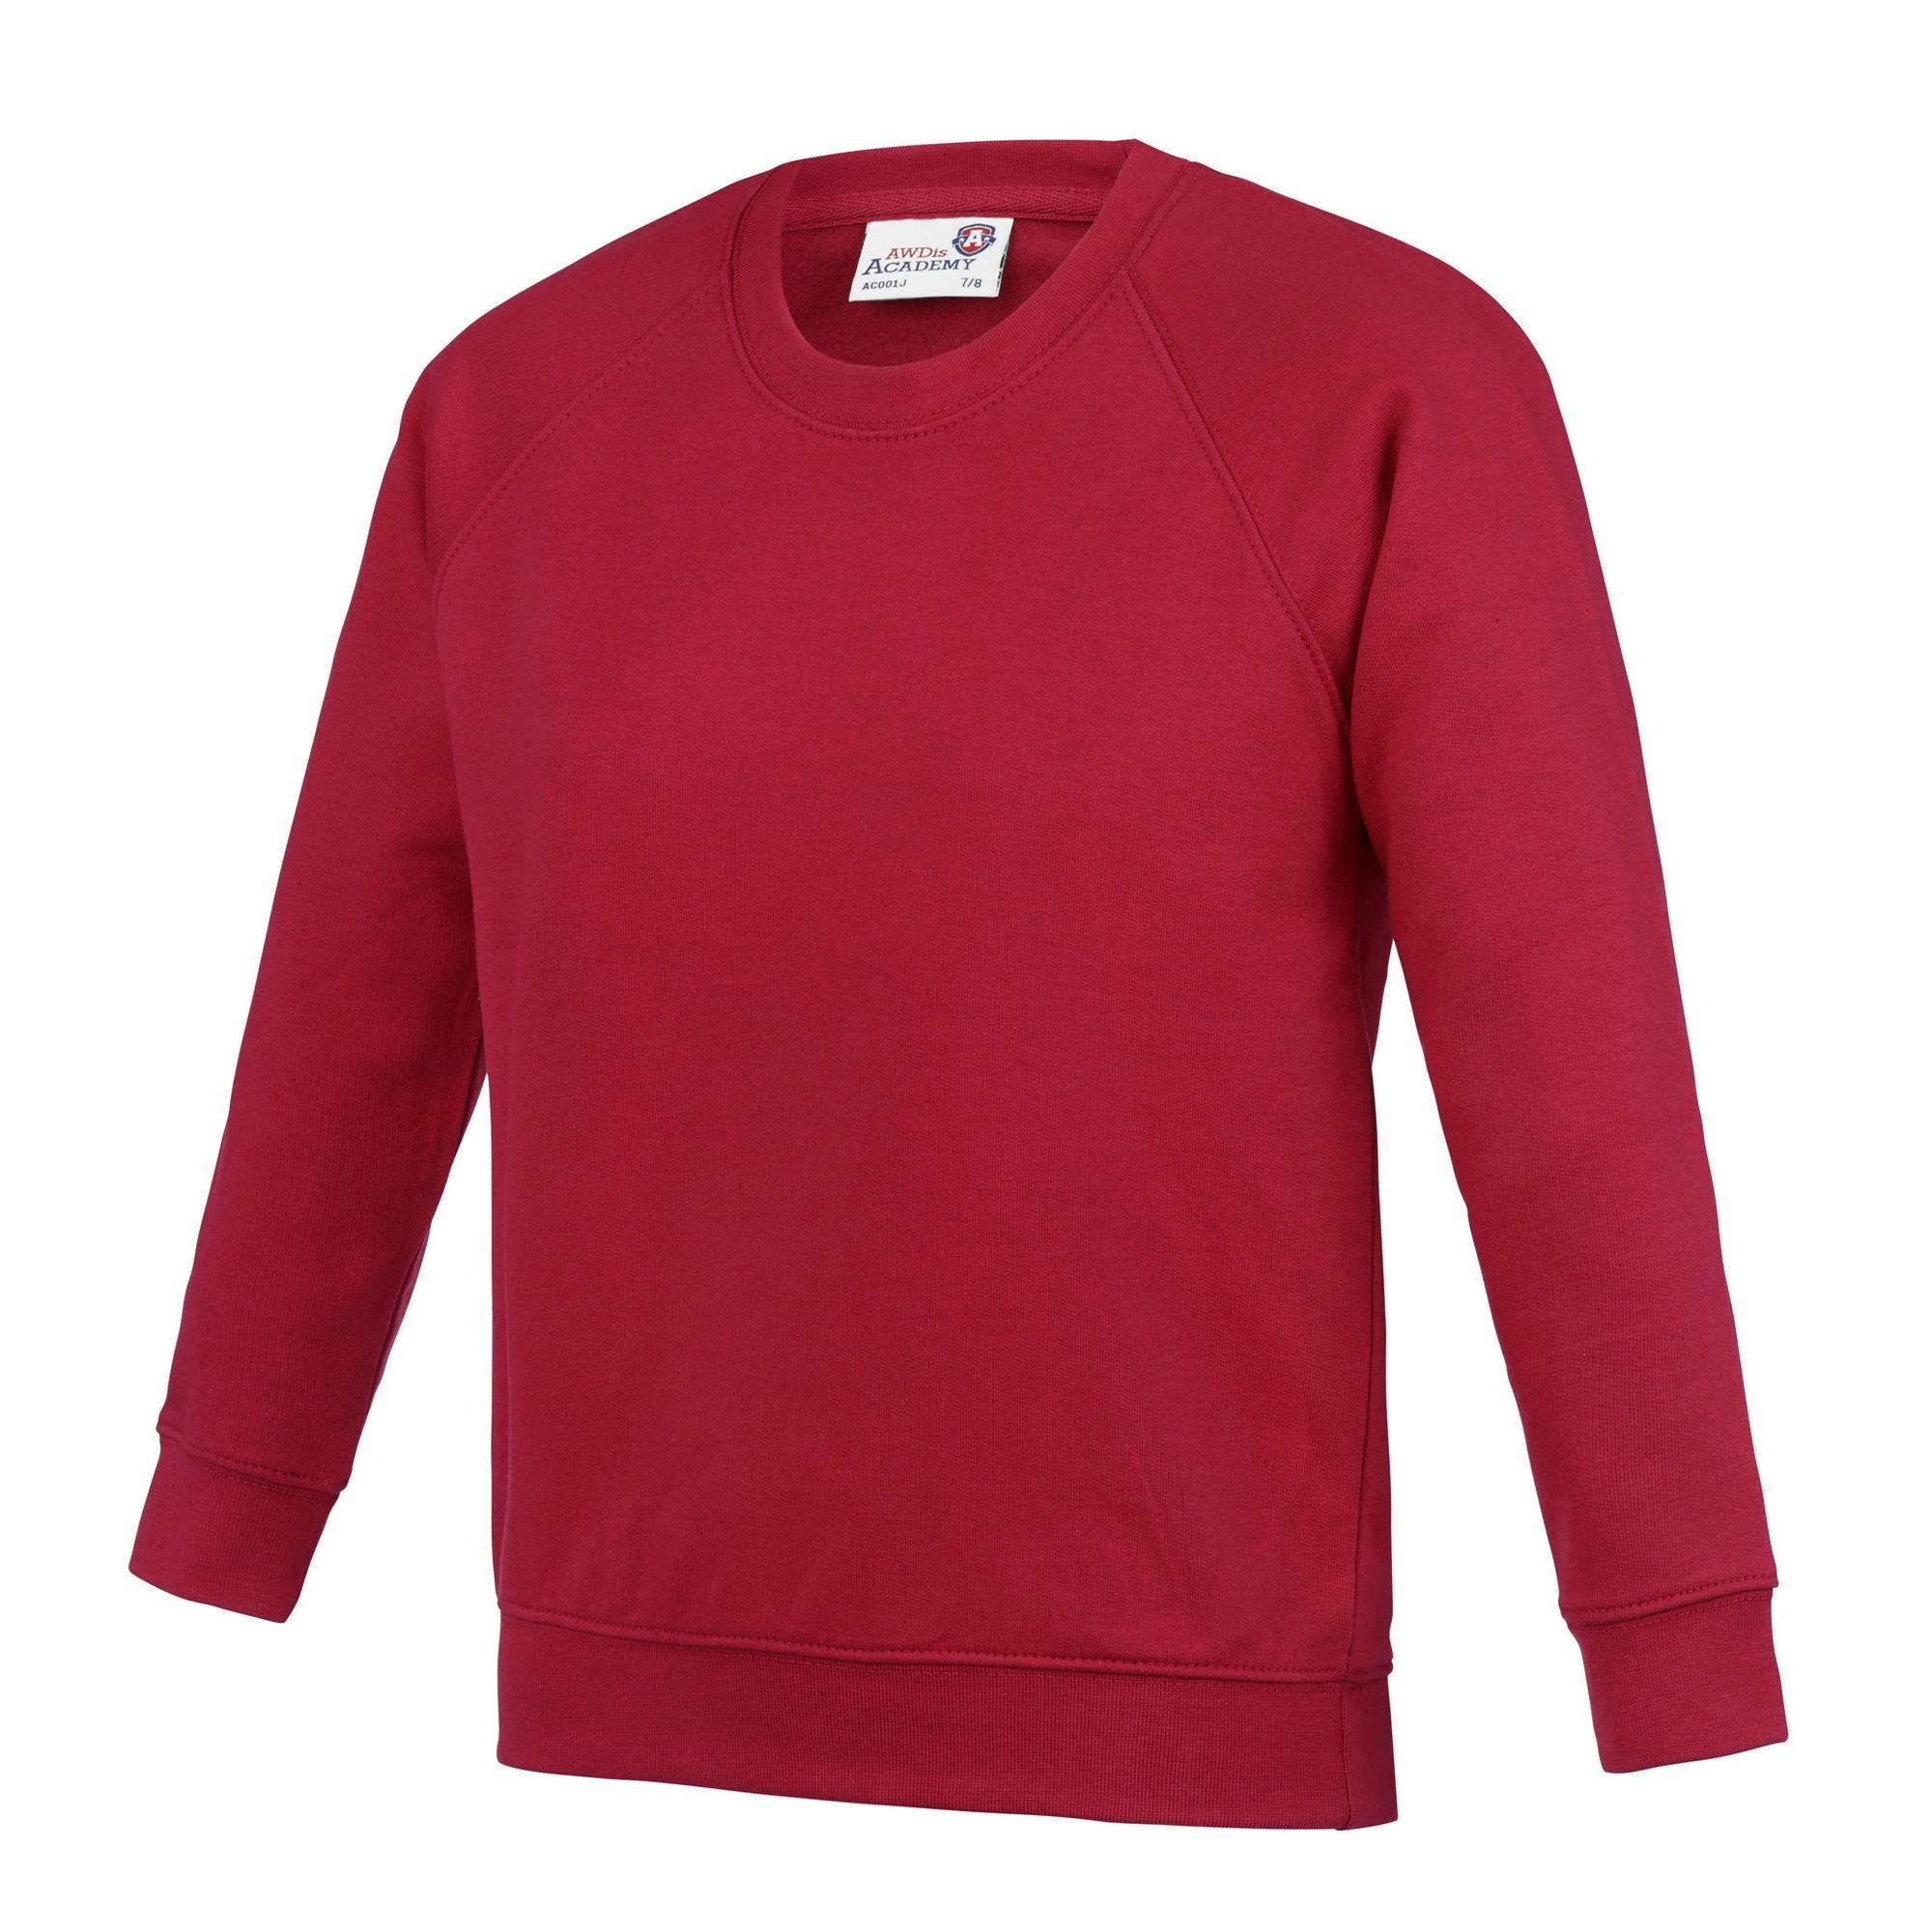 AWDis Academy Childrens/Kids Crew Neck Raglan School Sweatshirt (Pack of 2) (Red) (13 Years)